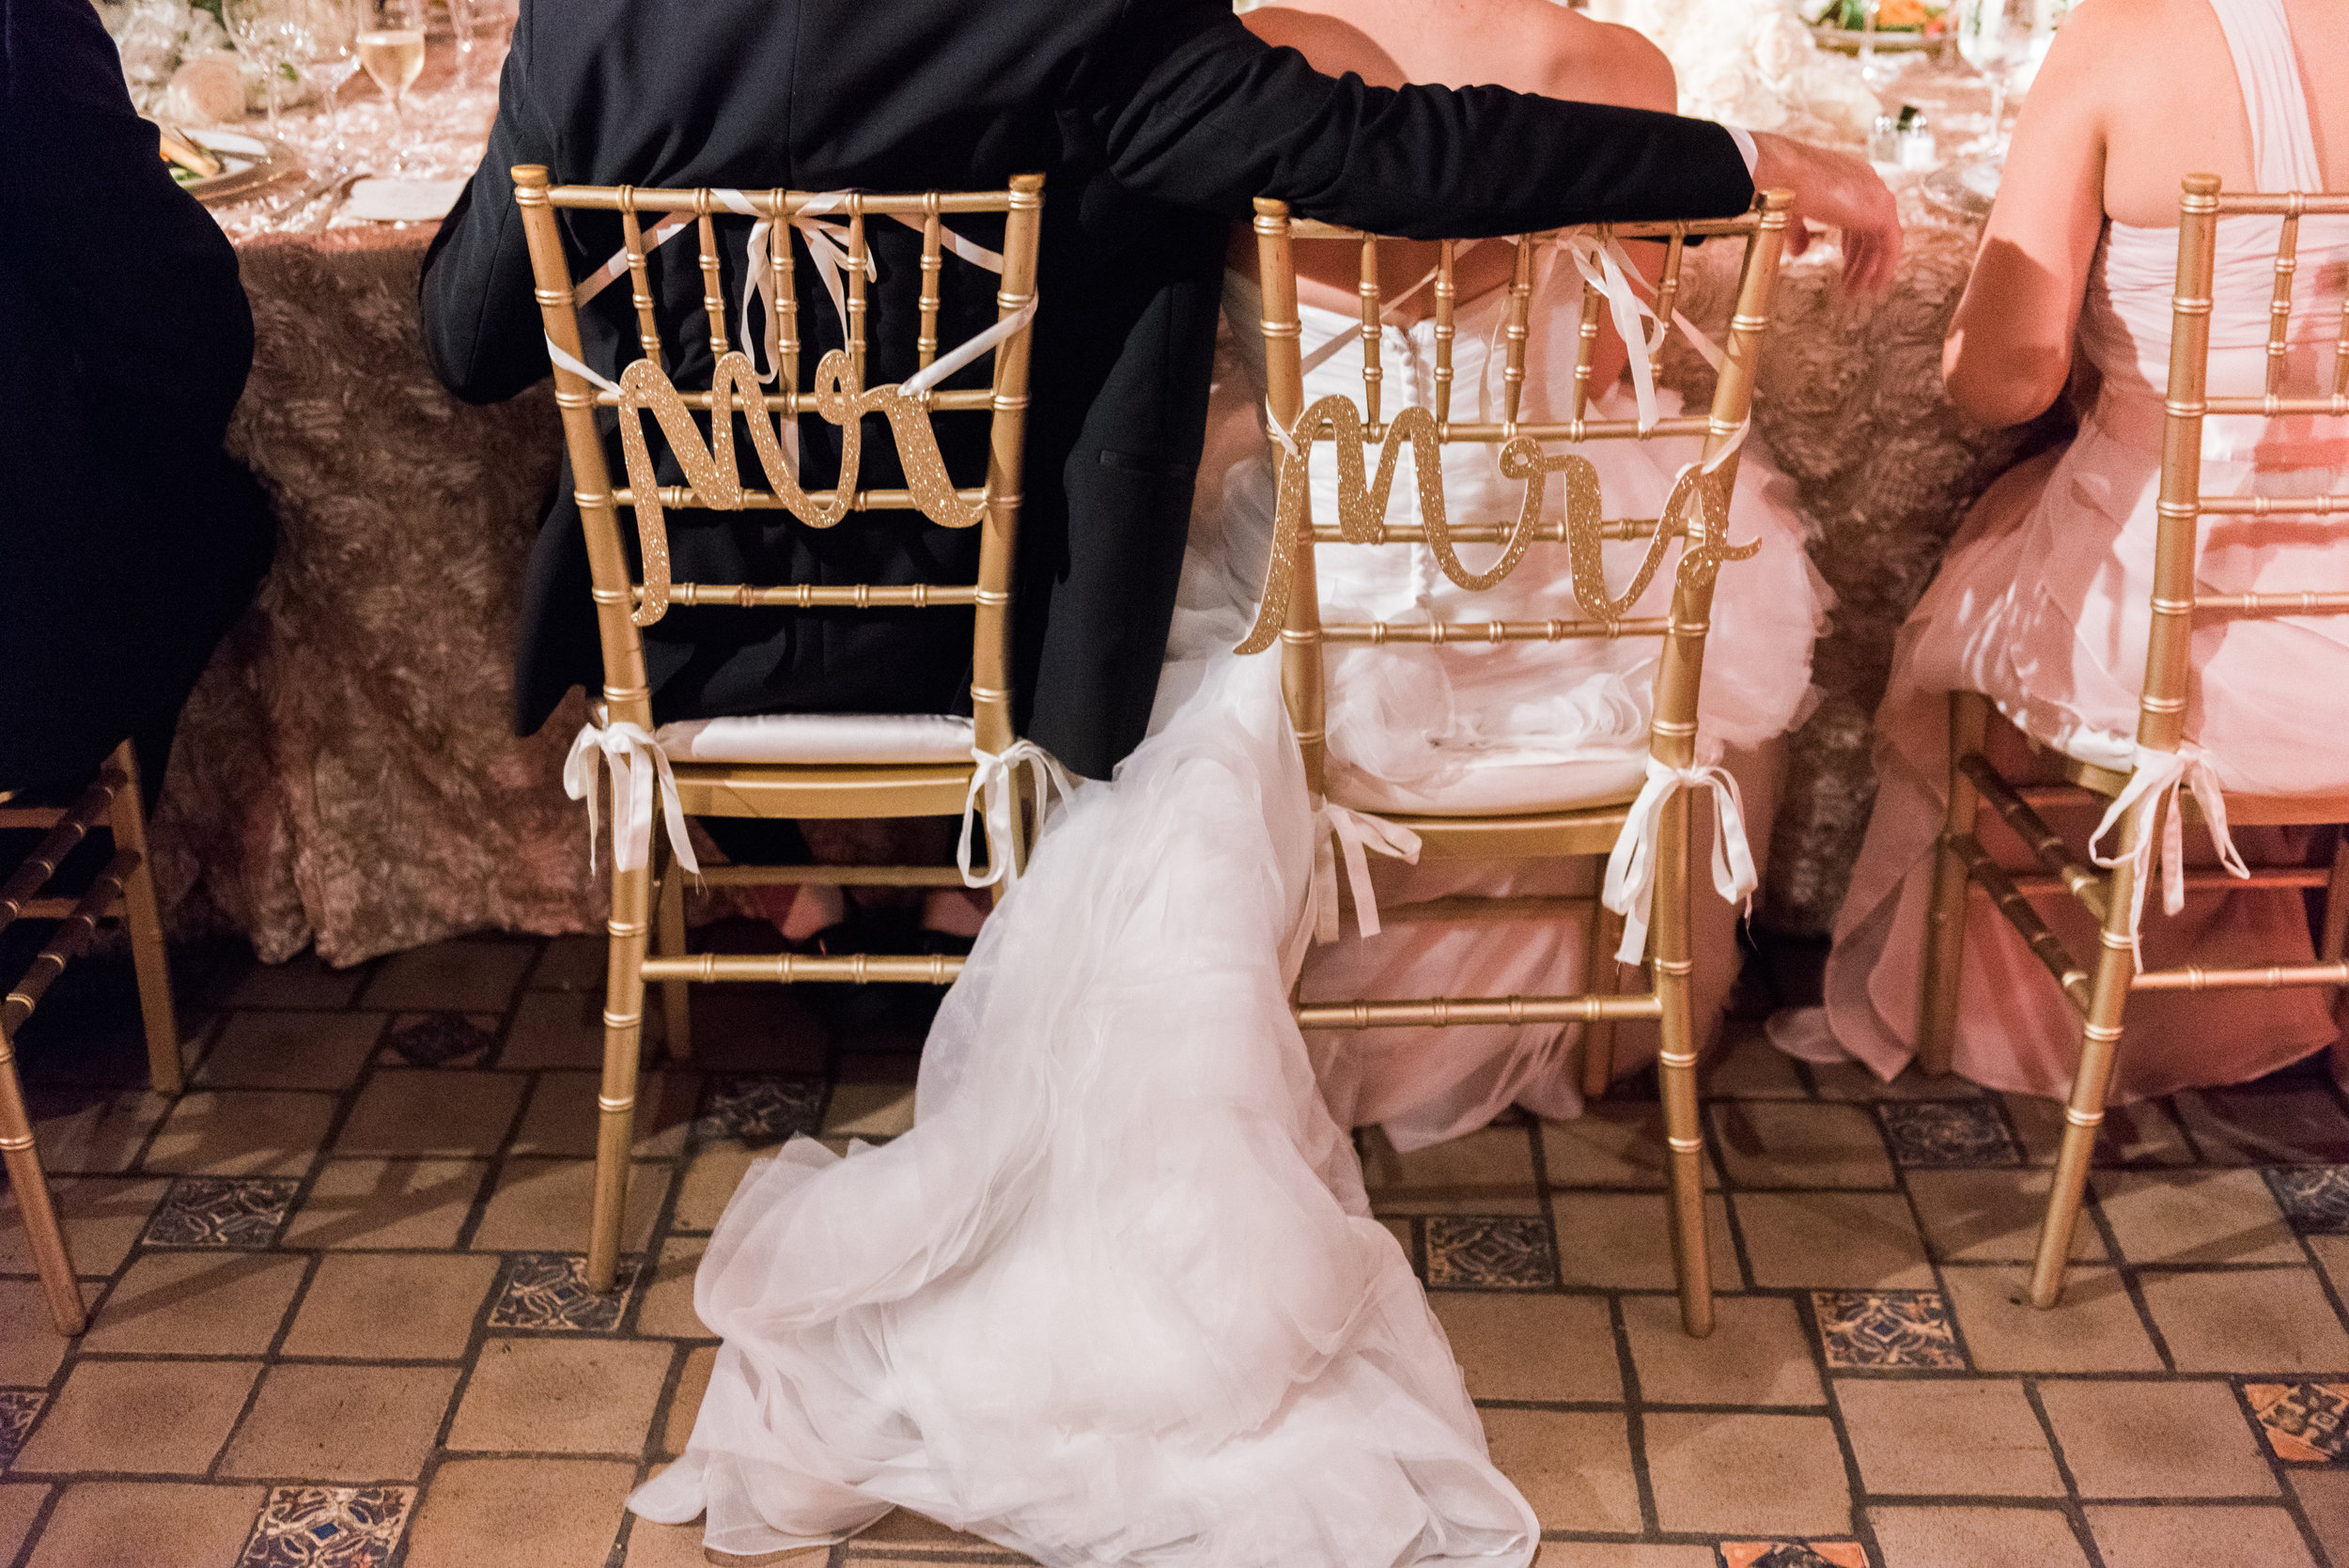 Unique Wedding Favor Ideas - Flagler Museum Palm Beach Wedding Reception - The Overwhelmed Bride Wedding Blog